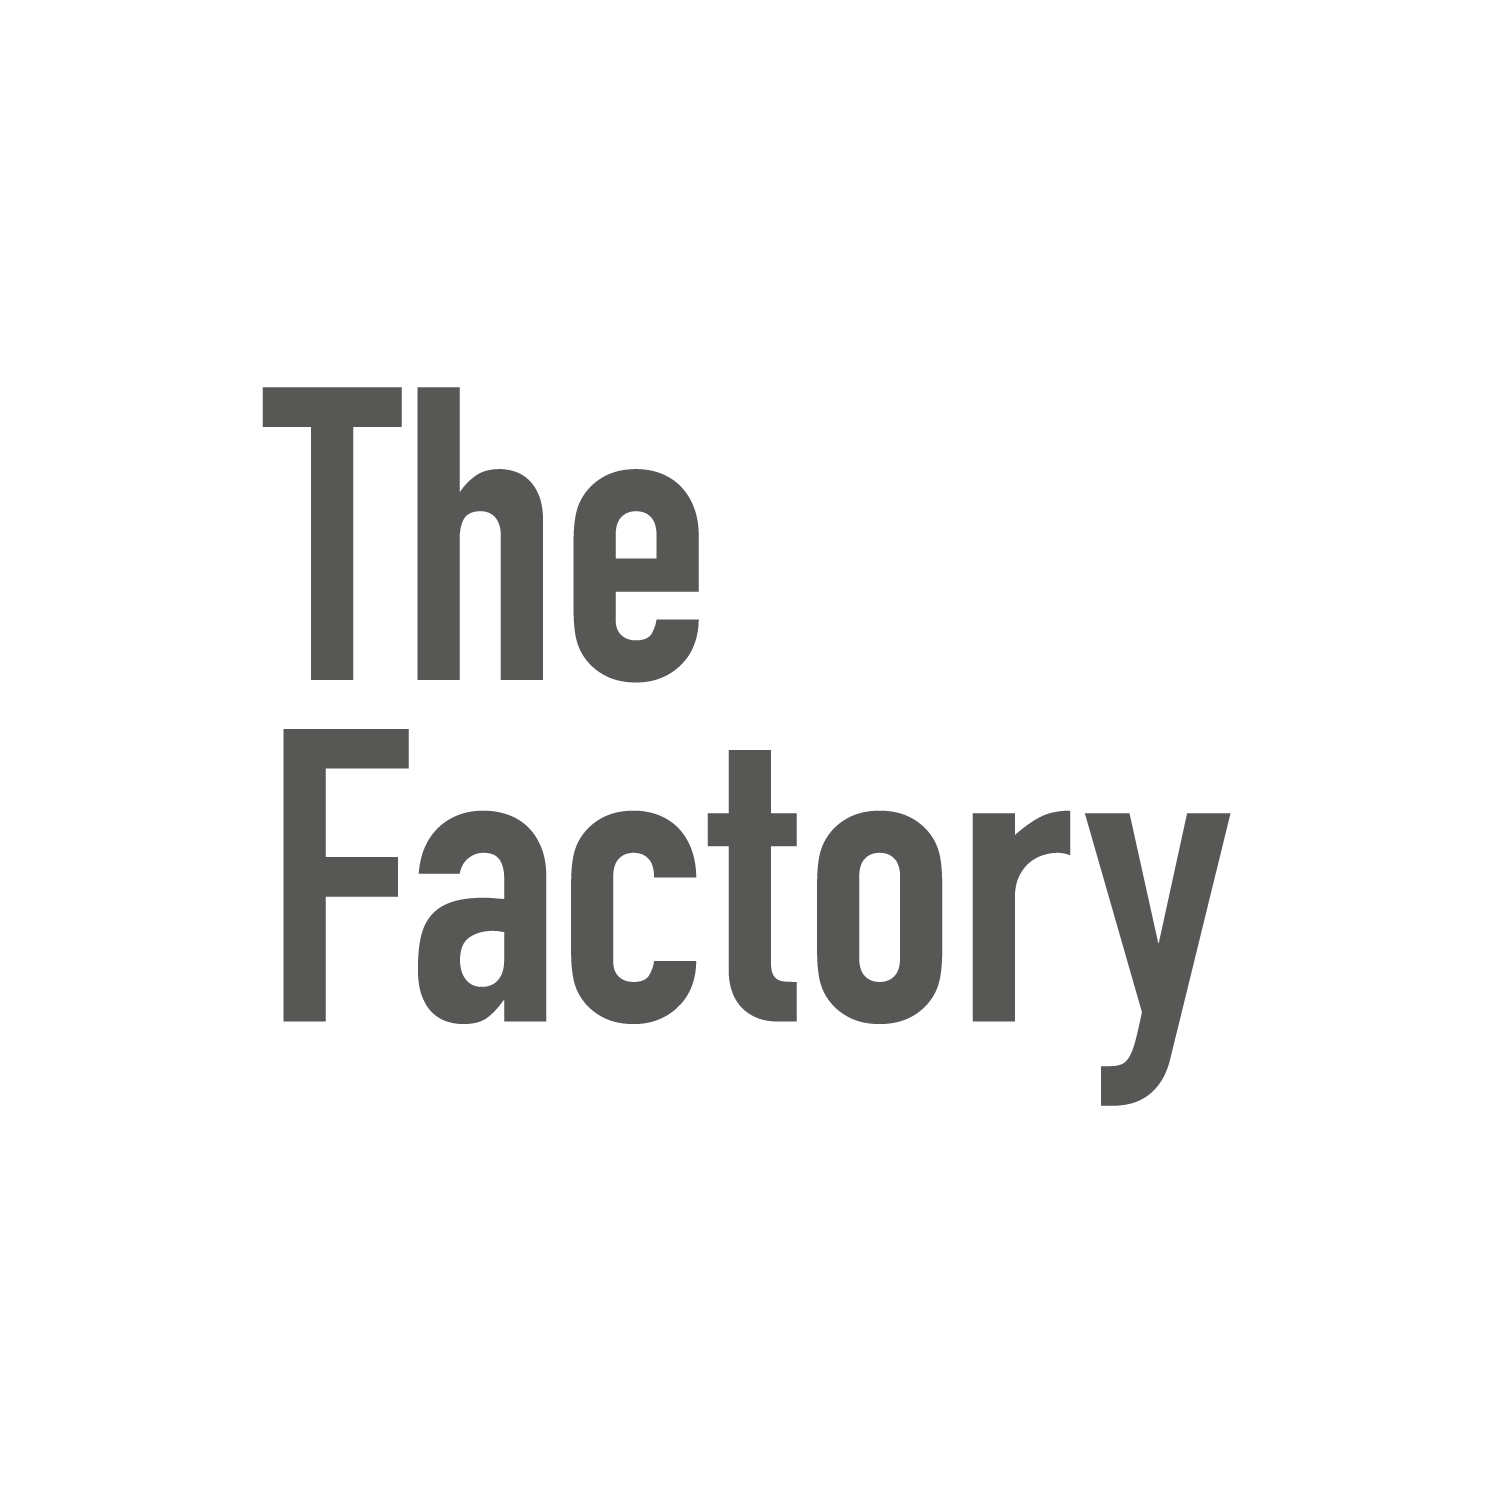 The-Factory-logo-transparent-invert.